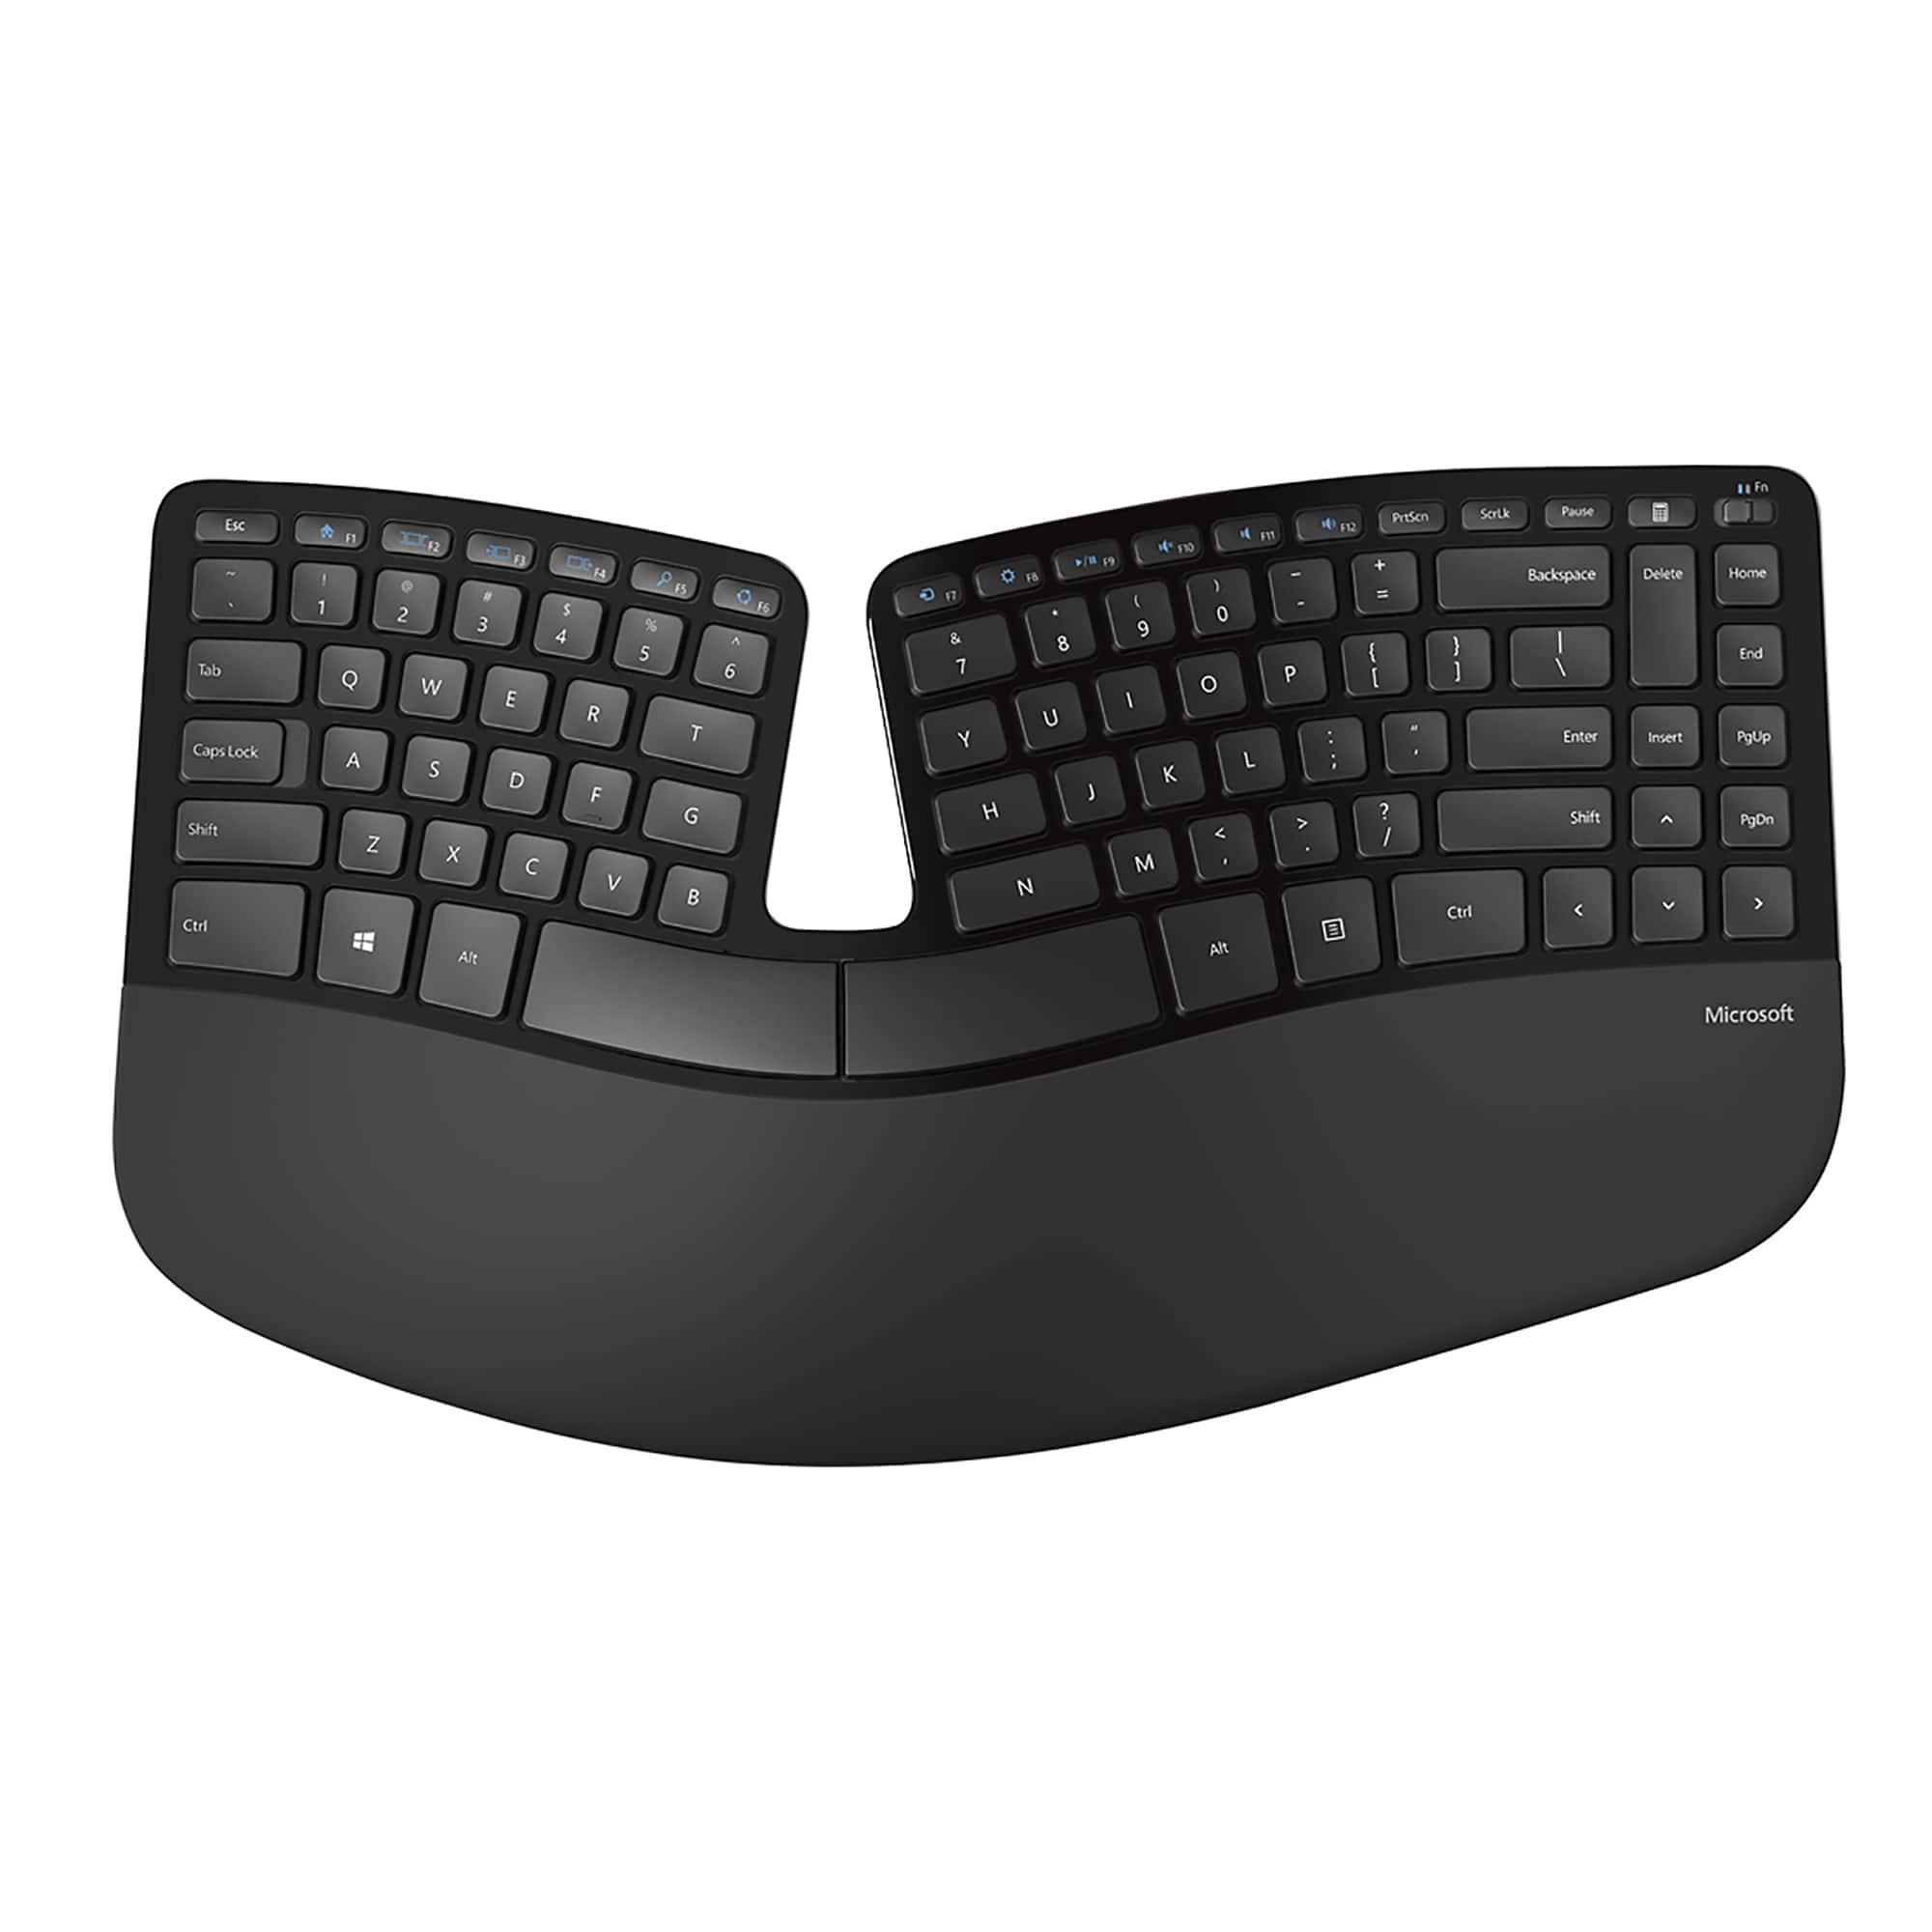 Microsoft Sculpt Ergonomic Keyboard Mouse Michaels